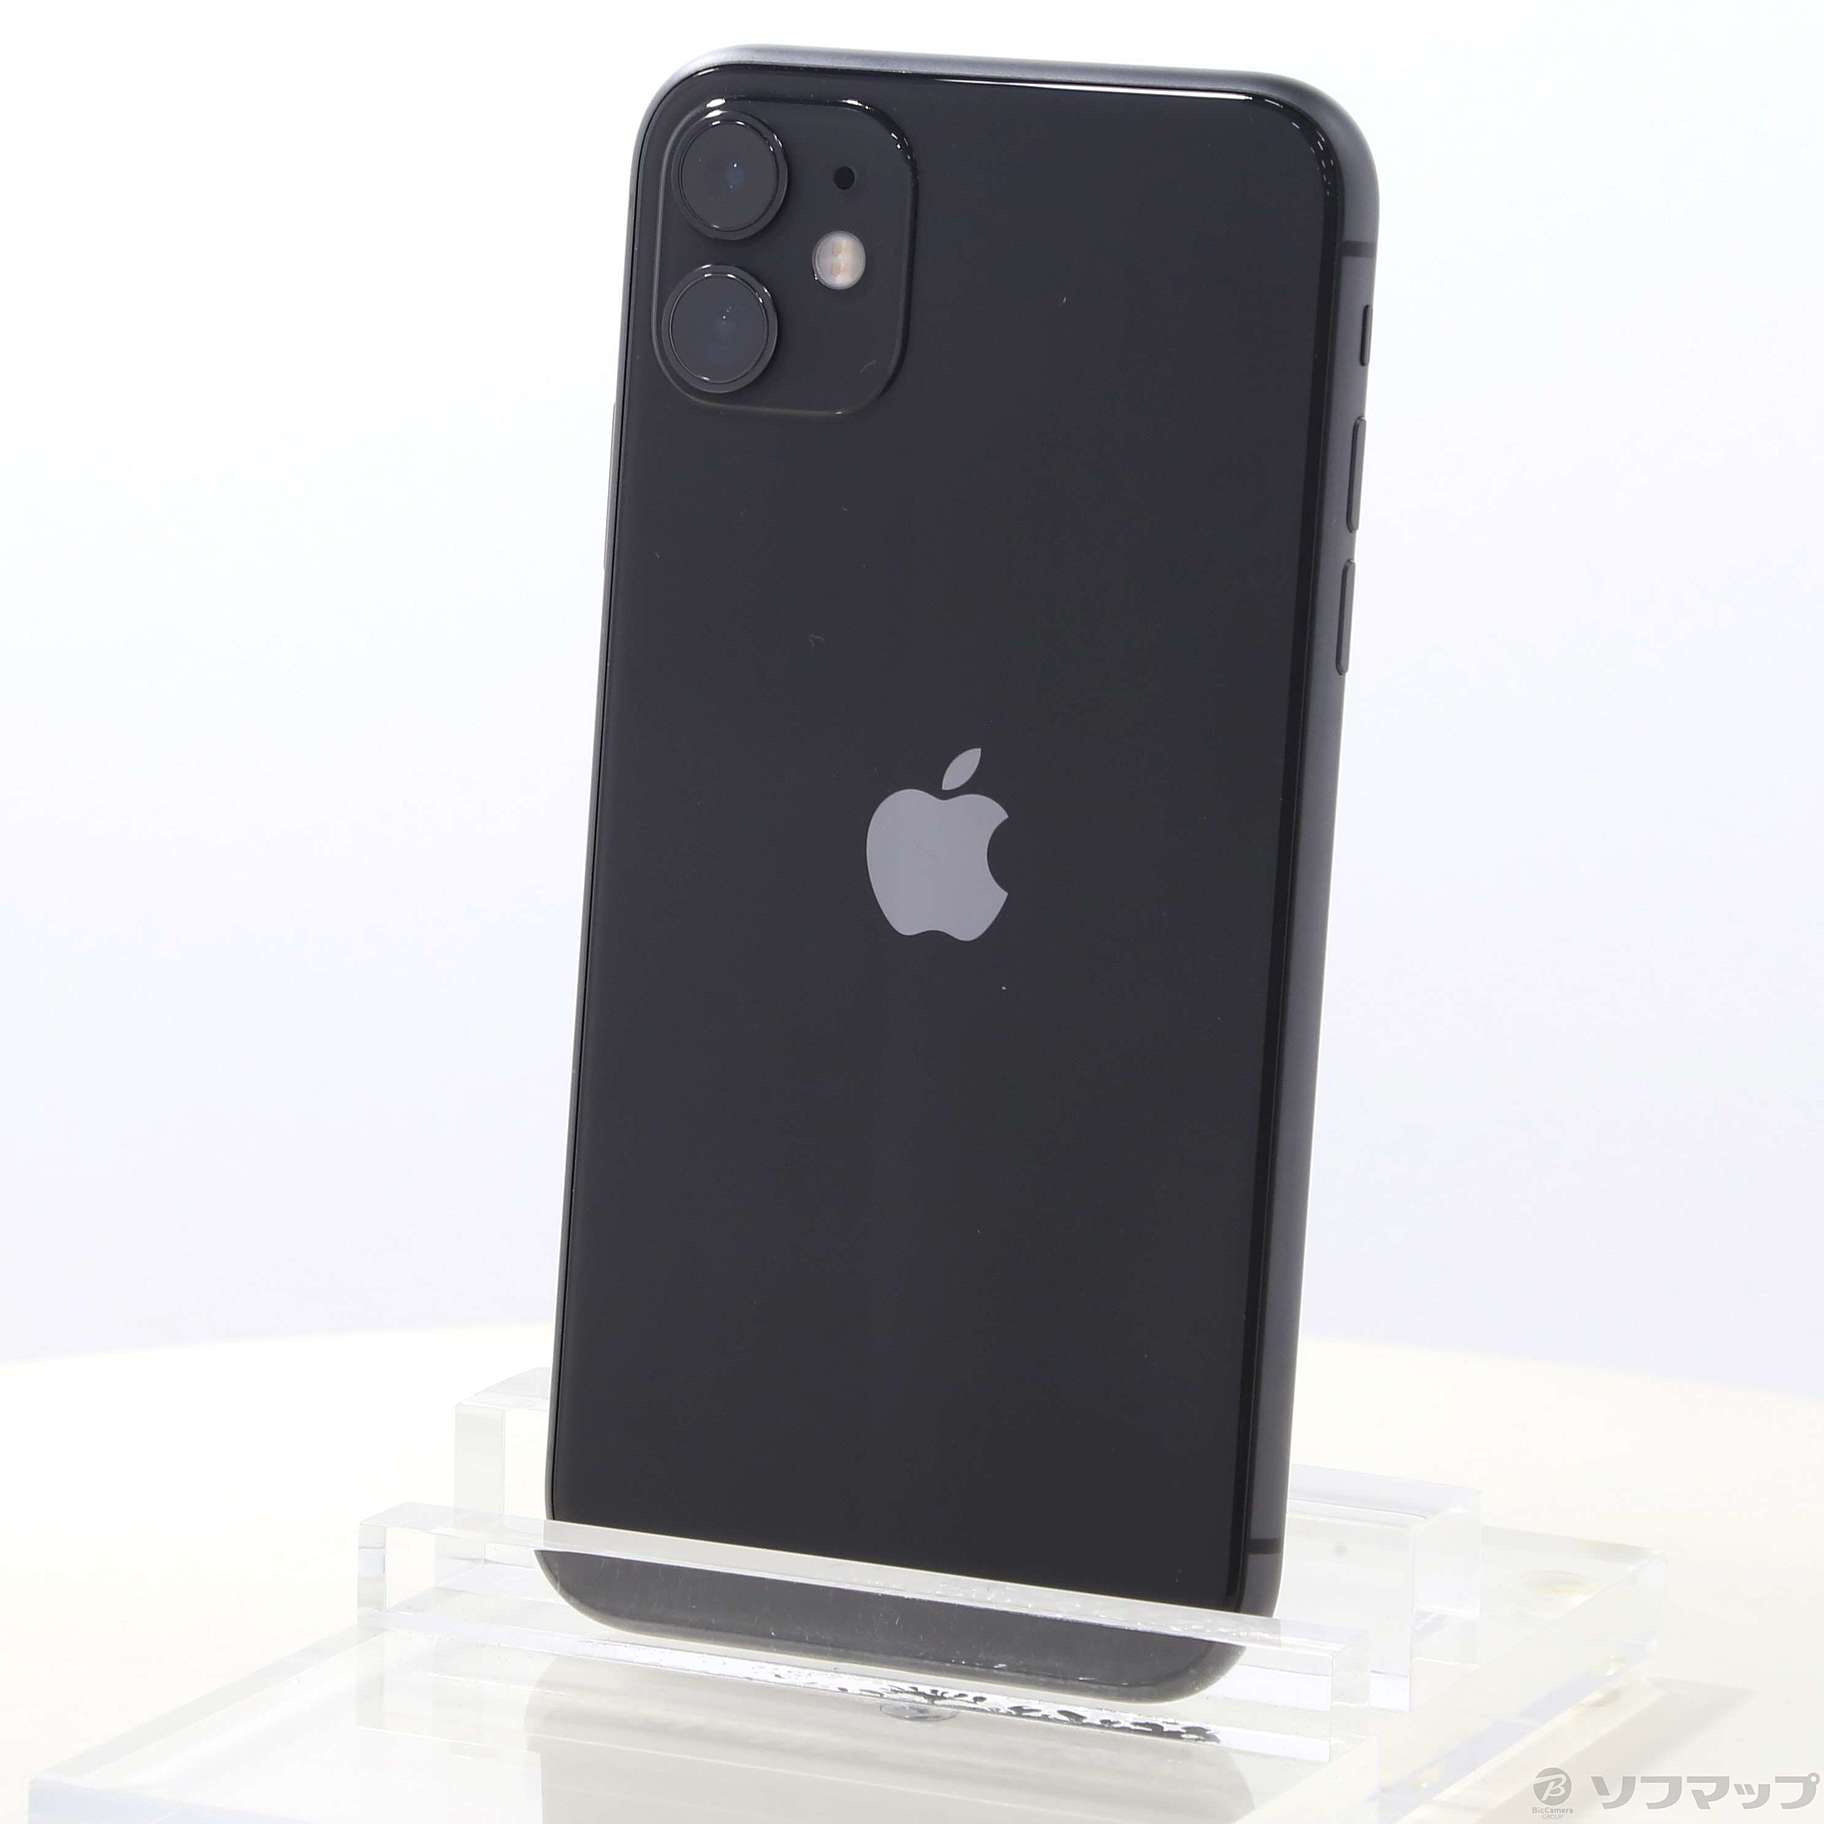 iPhone11 128GB SIMフリー 黒 ブラック Black 本体 - スマートフォン本体